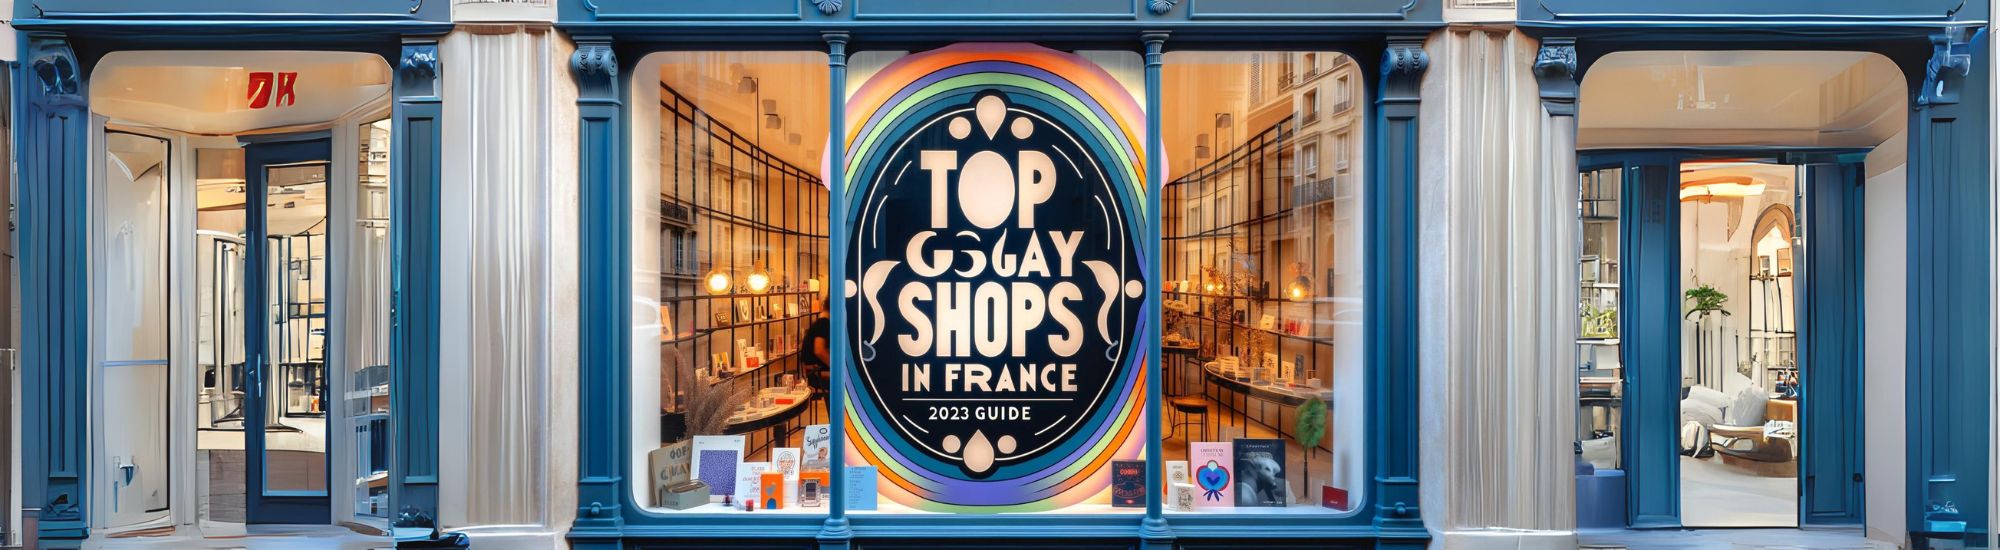 top5 sexshop gay france